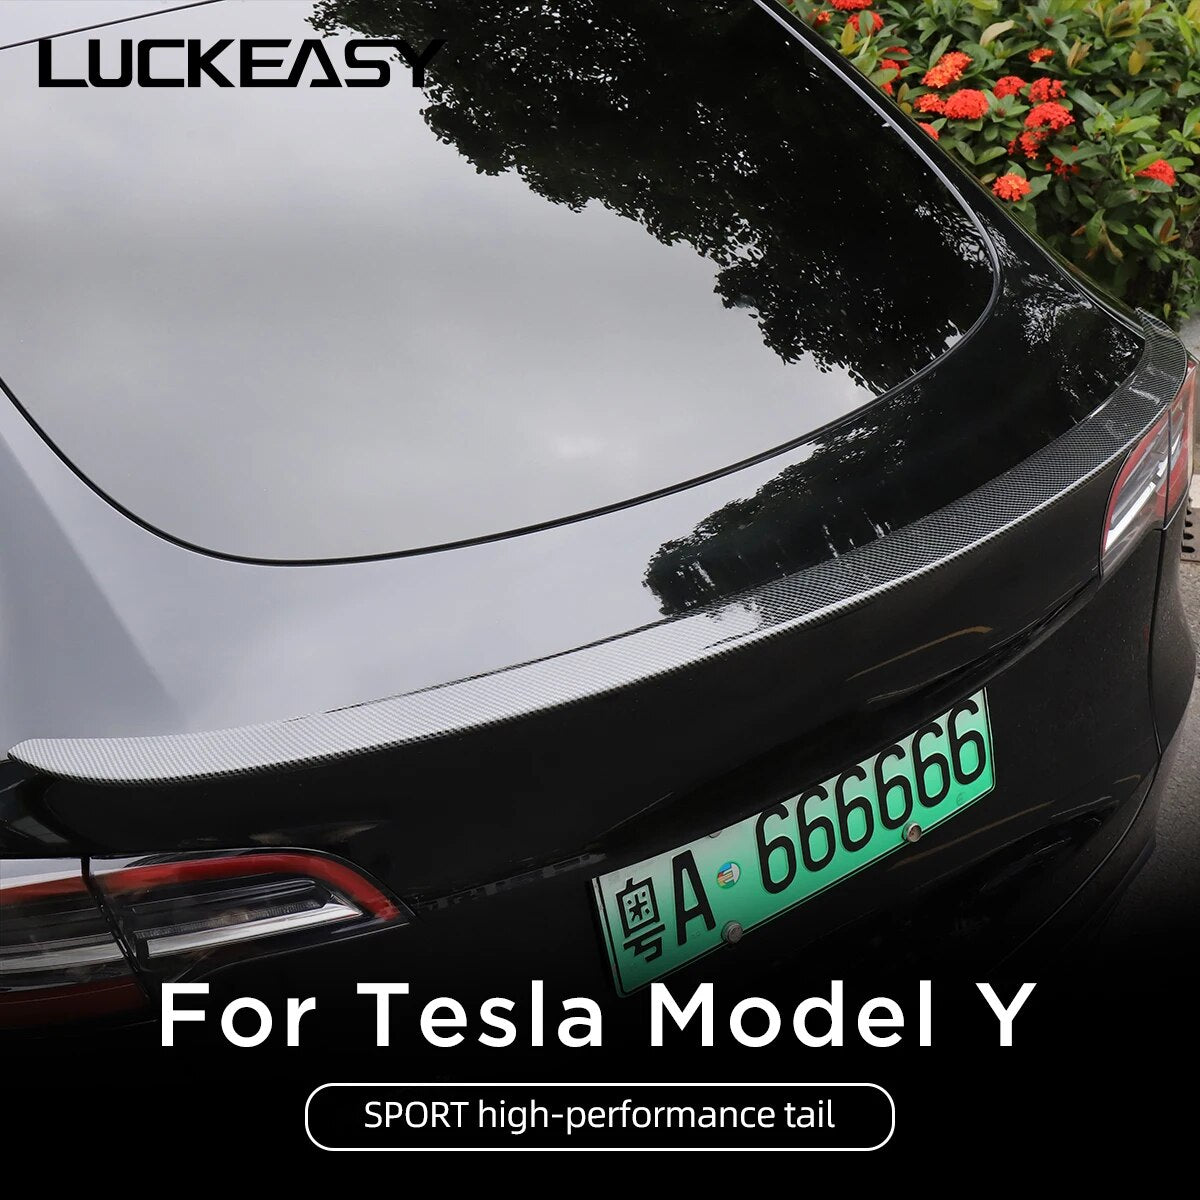 Enhanced Aero Dynamics Rear Spoiler for Tesla Model Y